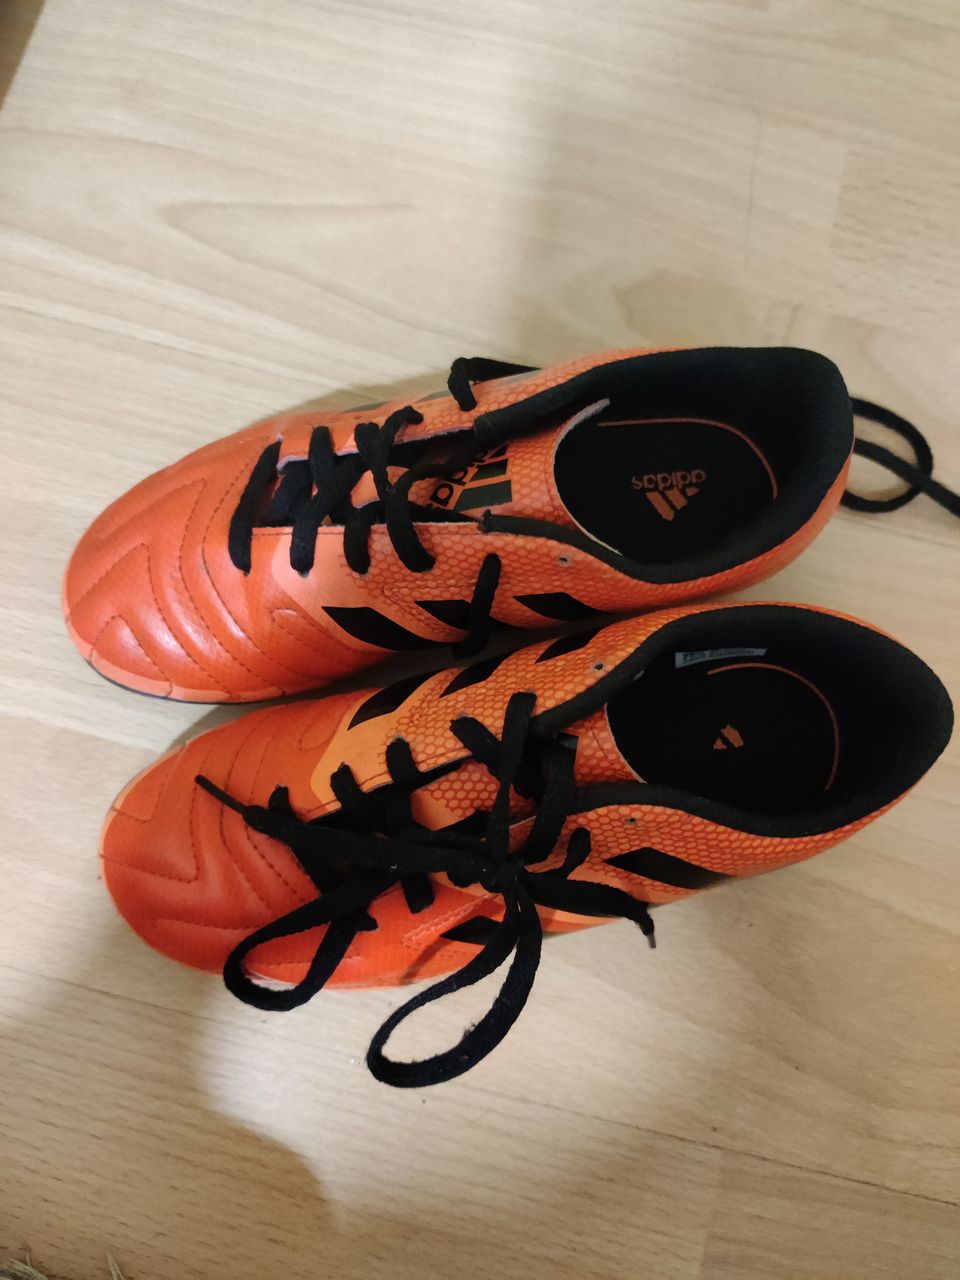 Addidas Football shoes / jalkapallo kengät - 33